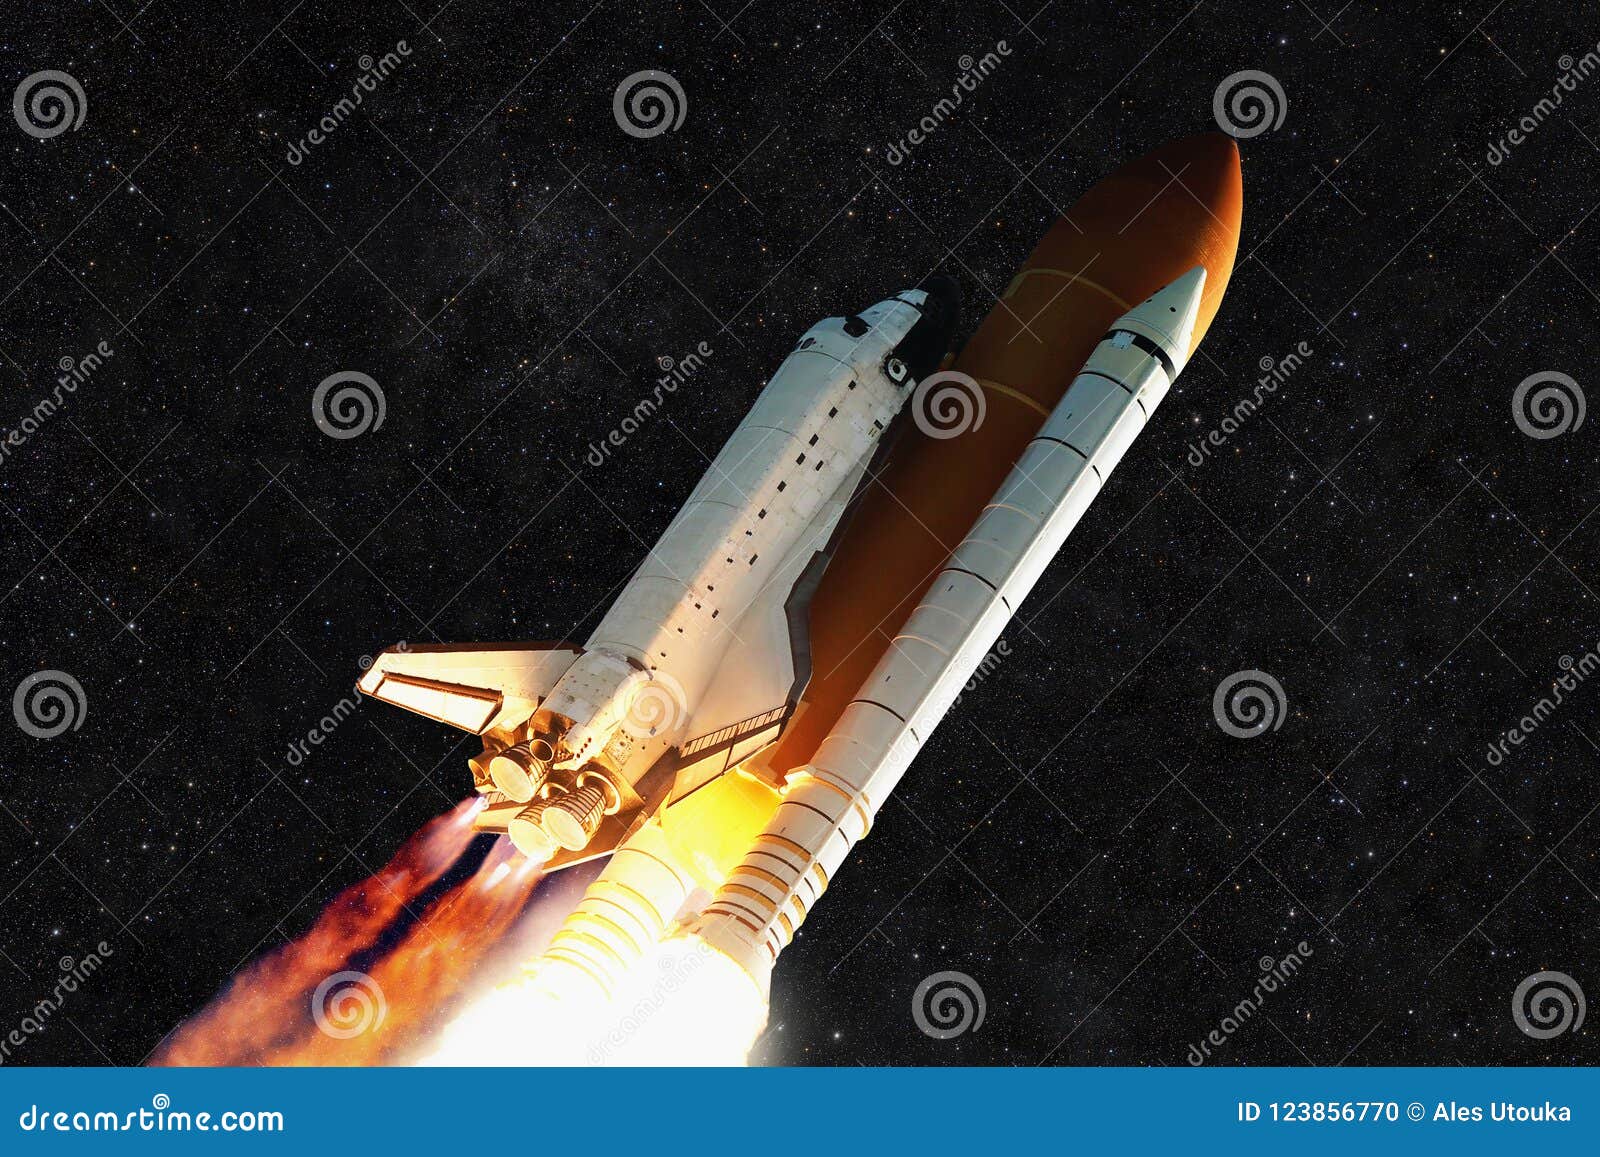 33,587 Rocket Sky Stock Photos - Free & Royalty-Free Stock Photos